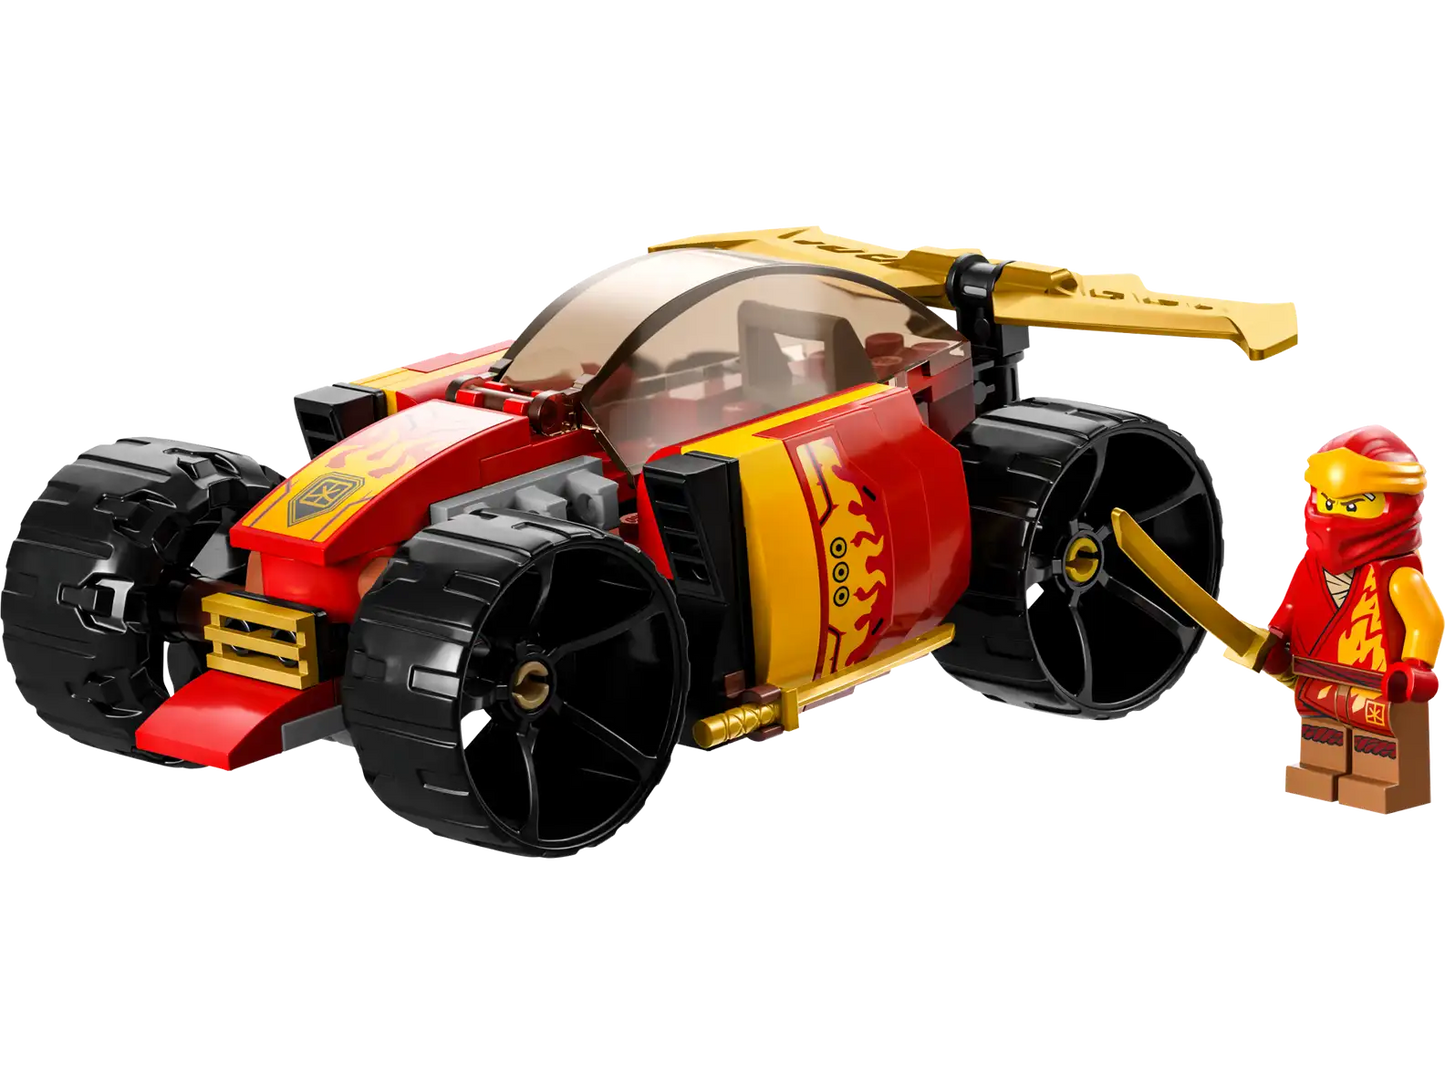 Lego - Ninjago Kais Ninja Car 71780